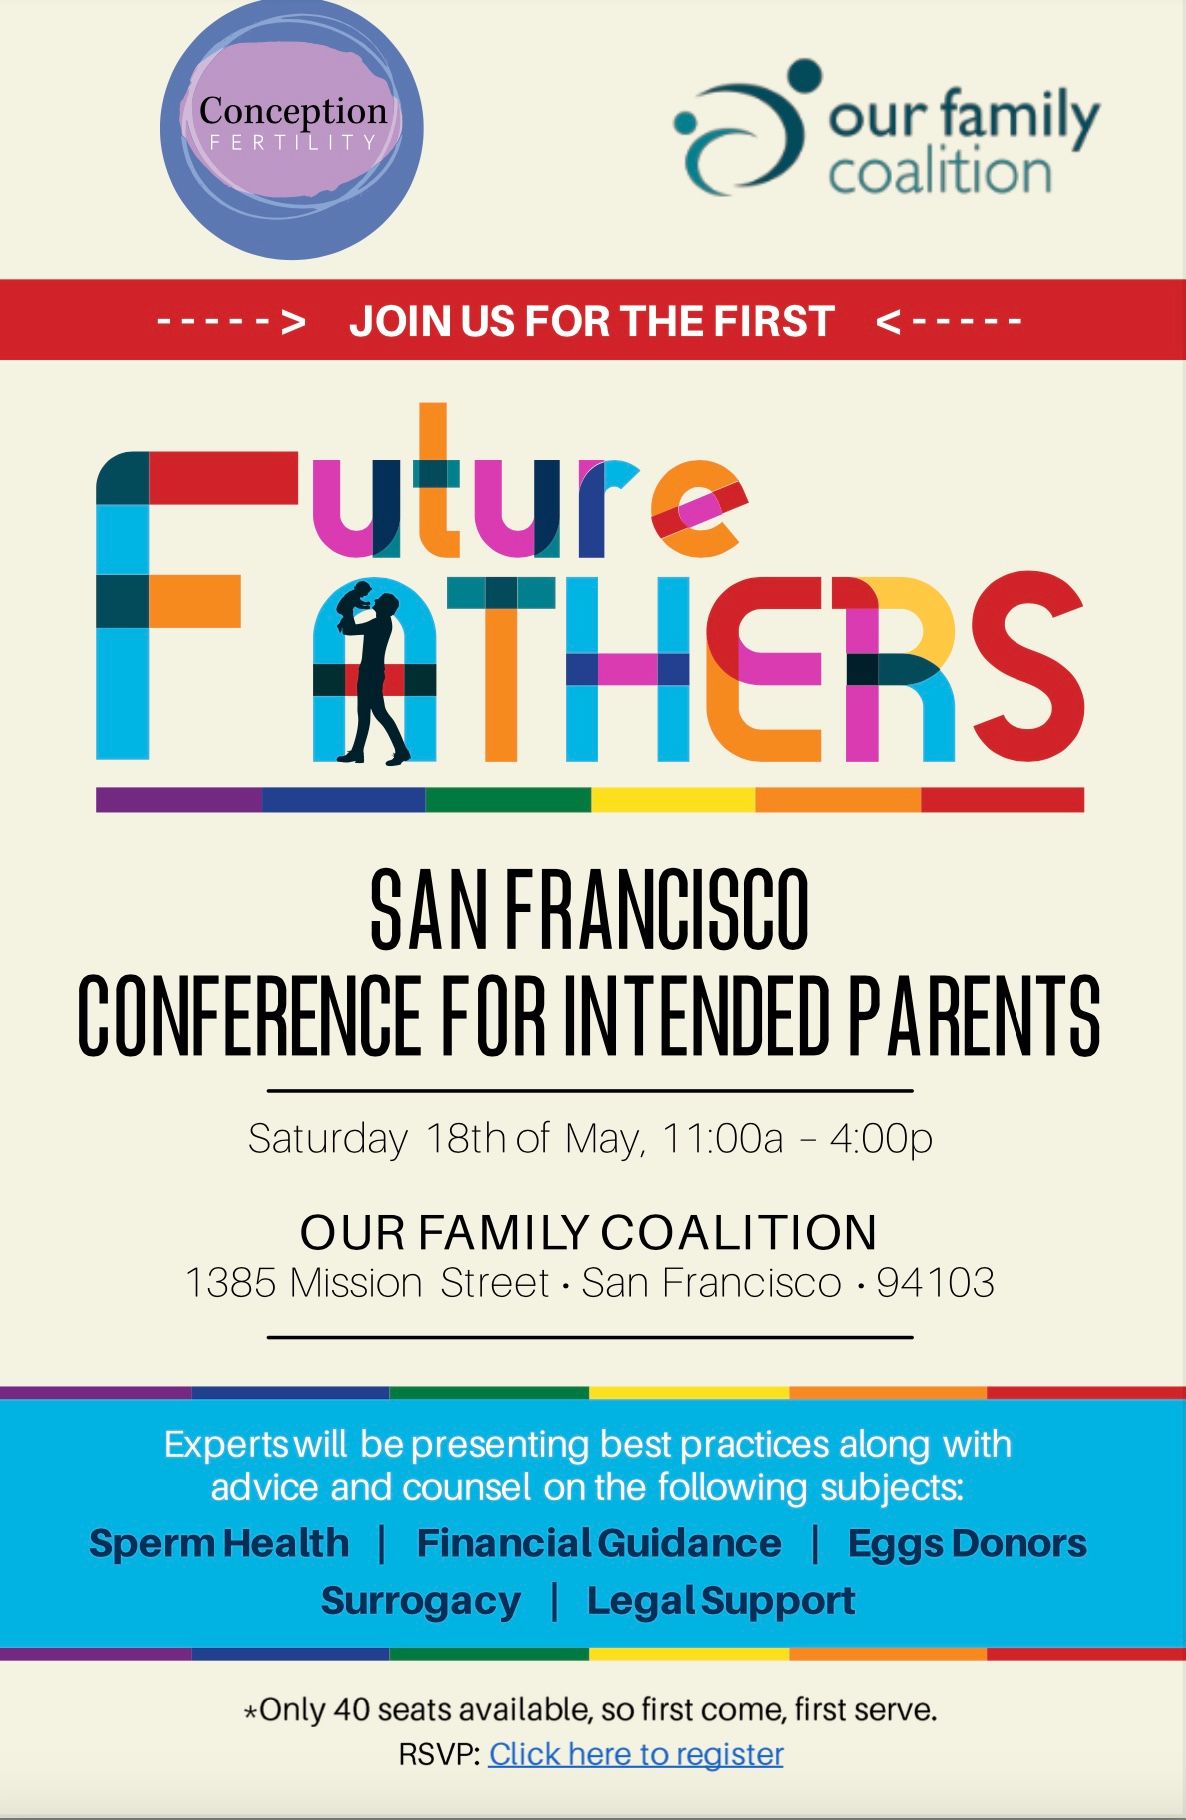 Future Fathers San Francisco Conference